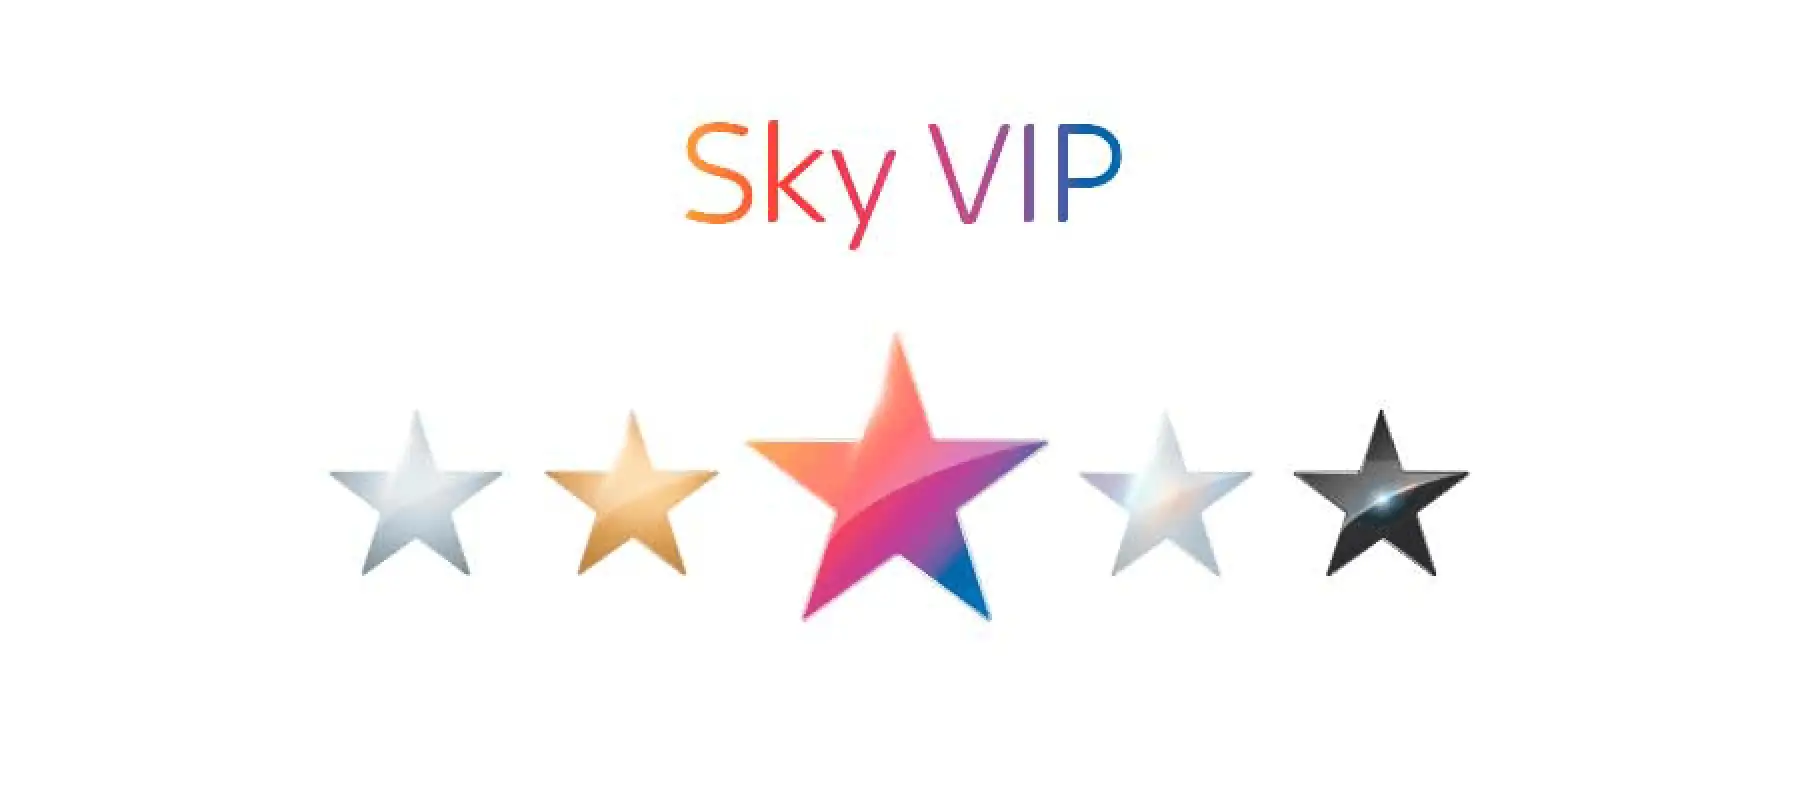 Sky VIP loyalty program